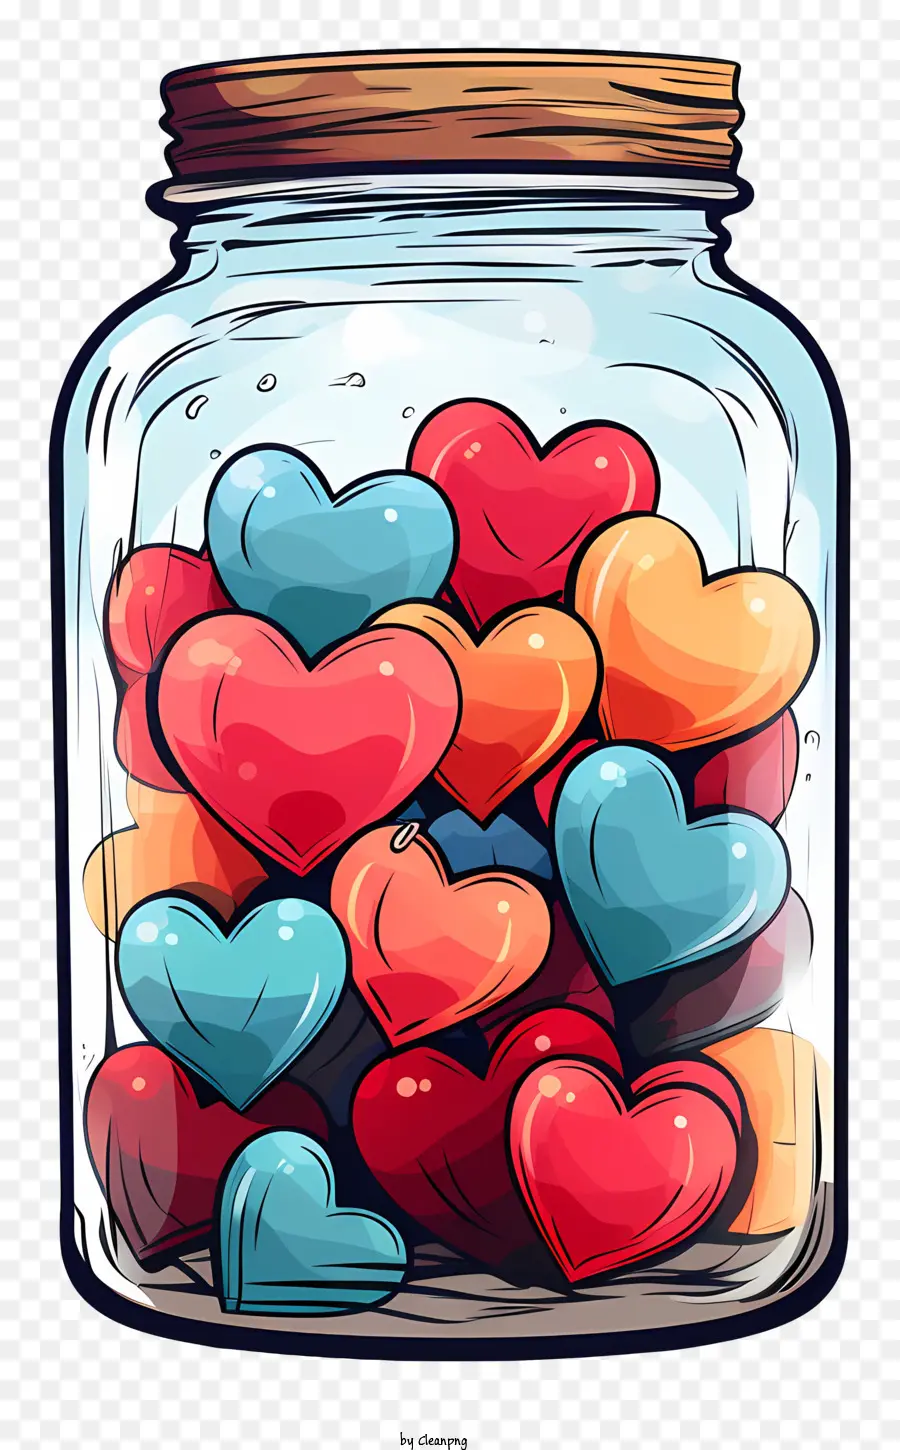 mason jar with heart glass jar colorful hearts clear liquid floating hearts